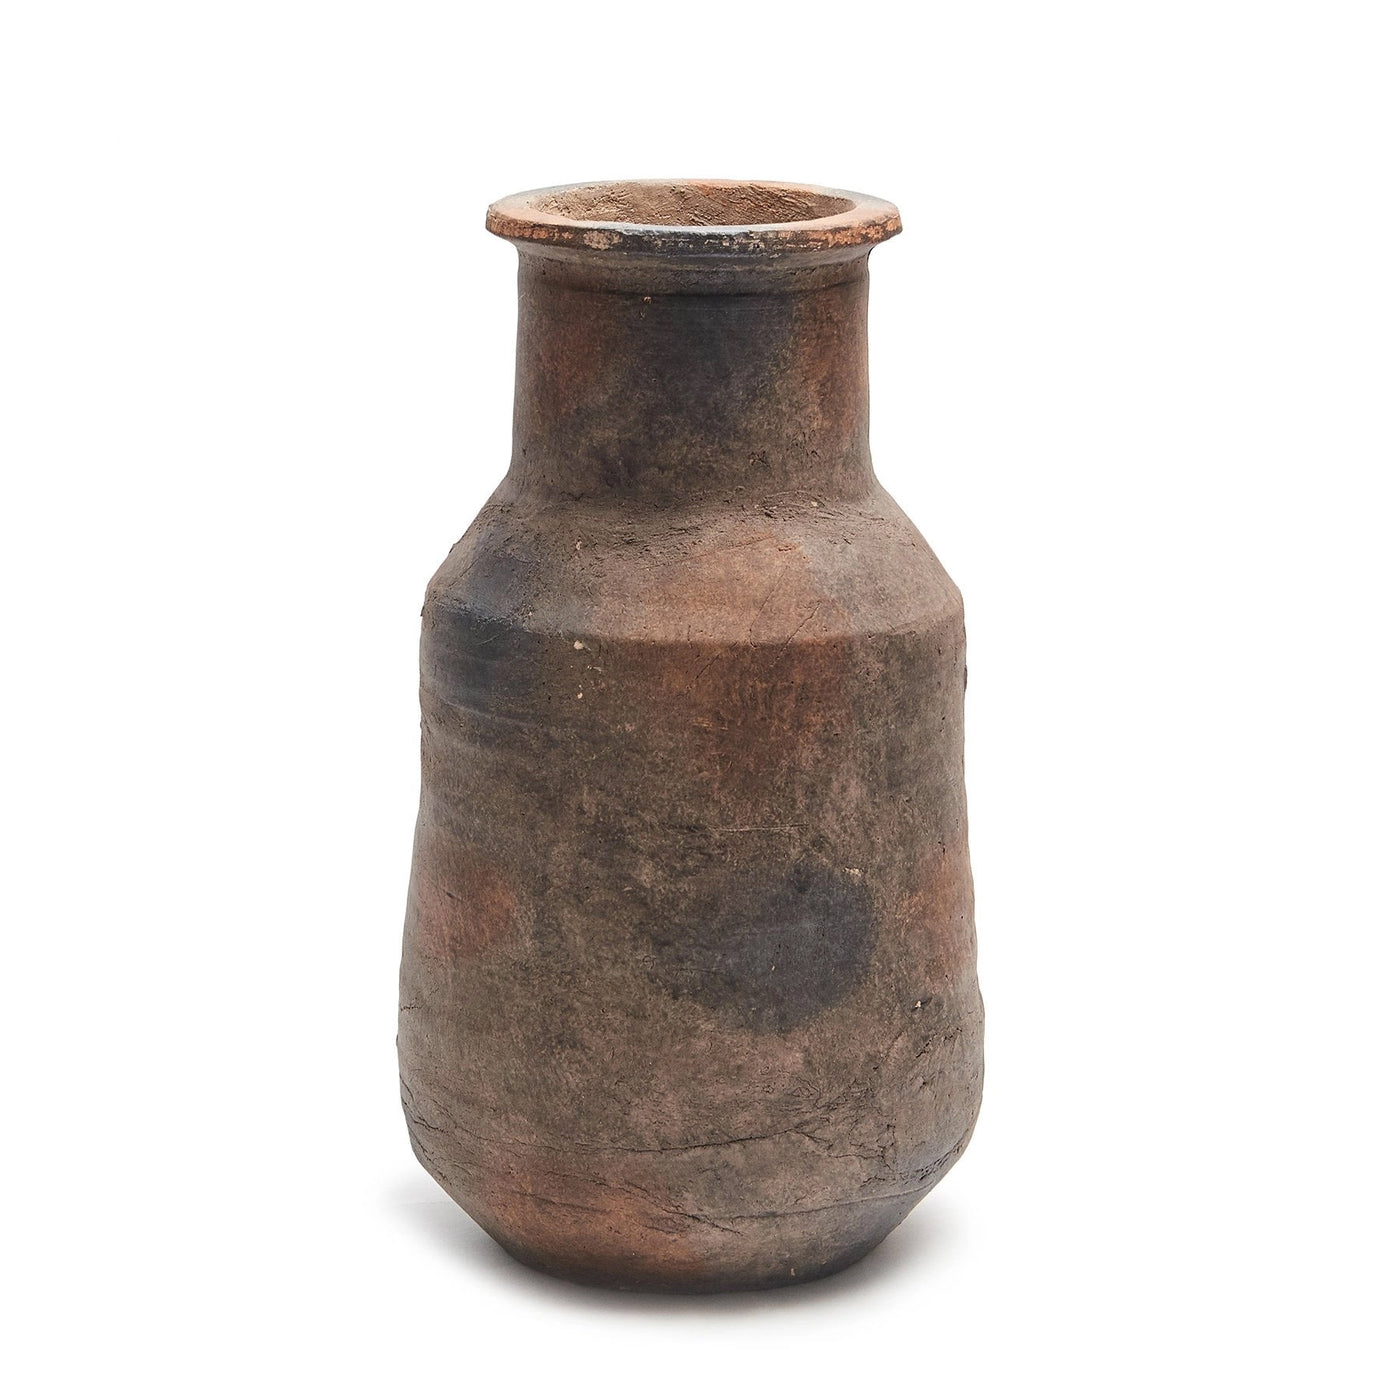 The Panobo Vase